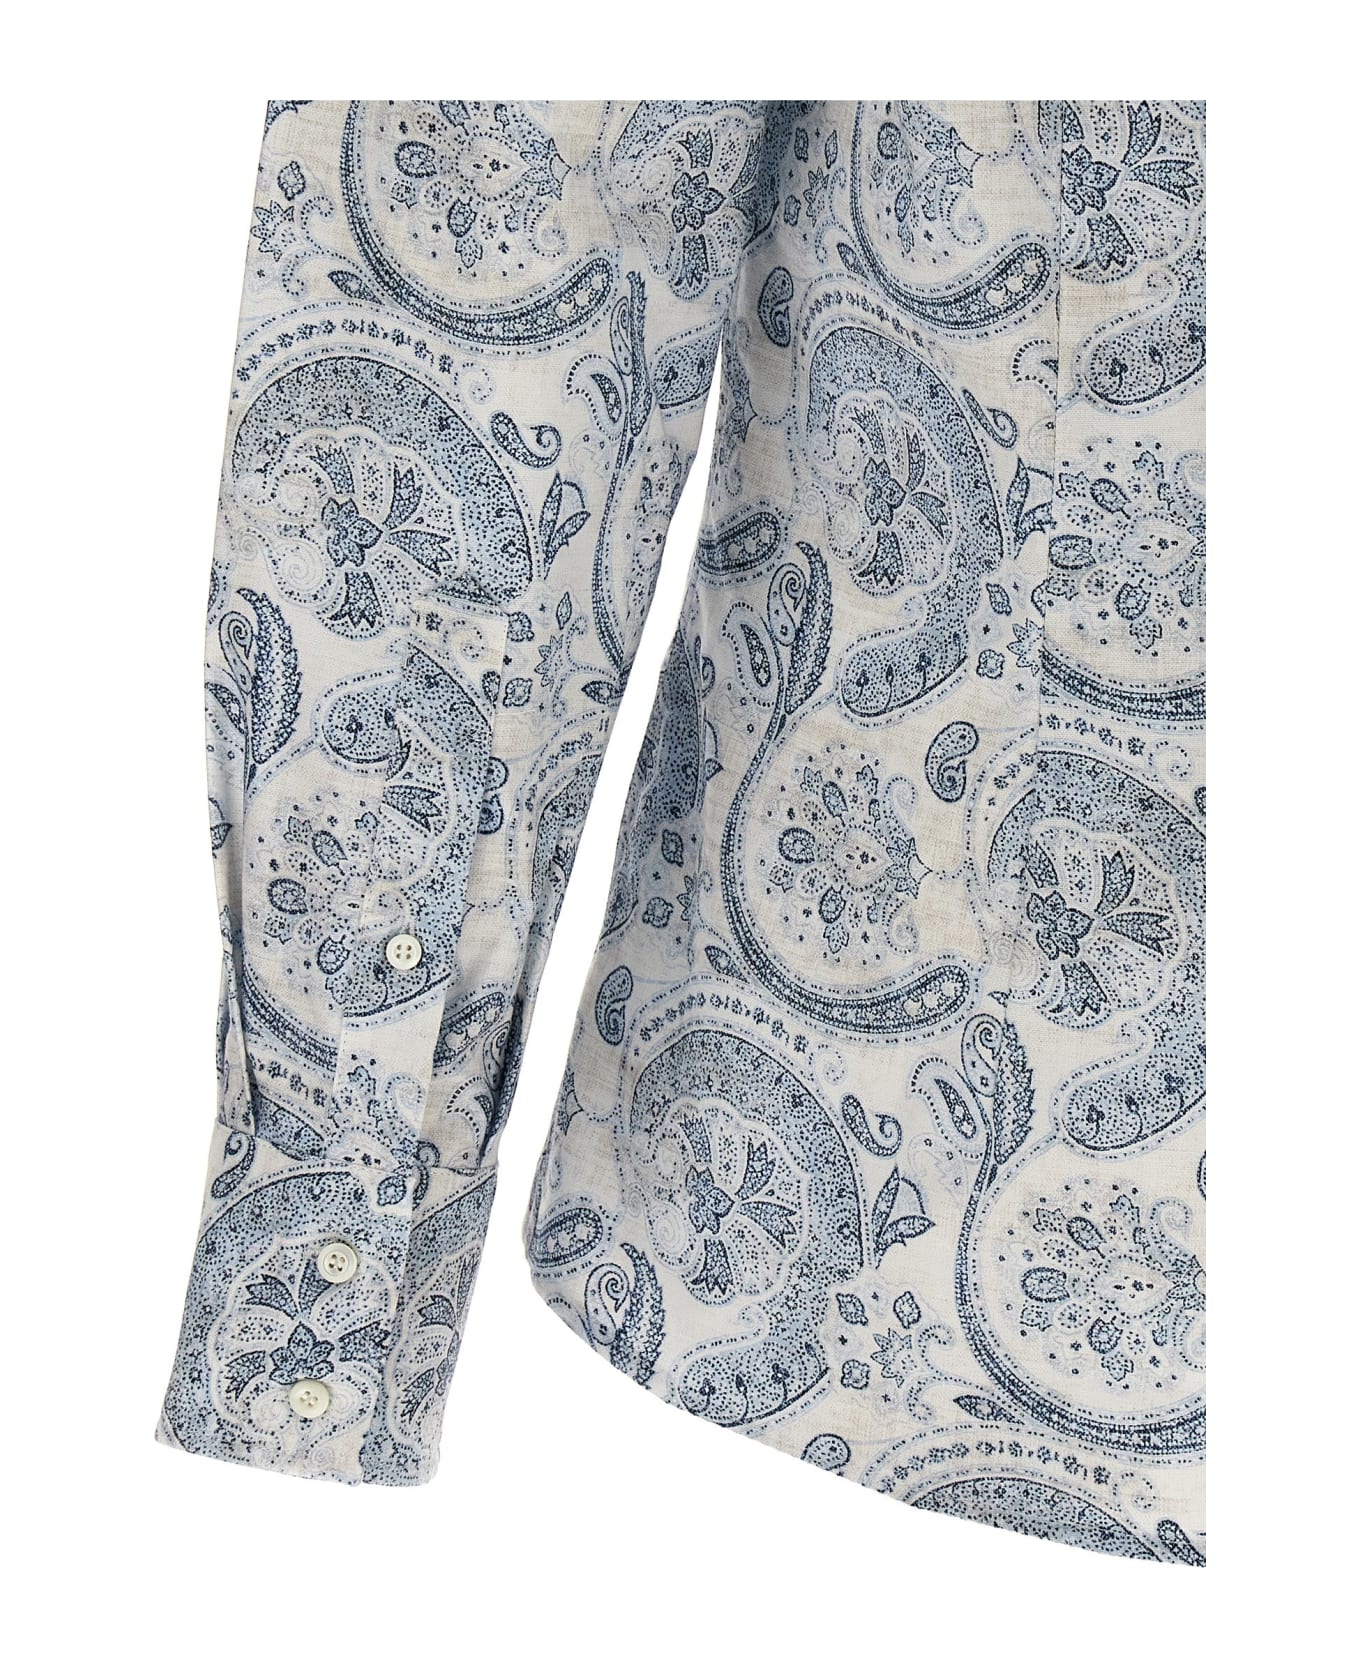 Brunello Cucinelli Pattern-printed Button-up Shirt - Light Blue シャツ